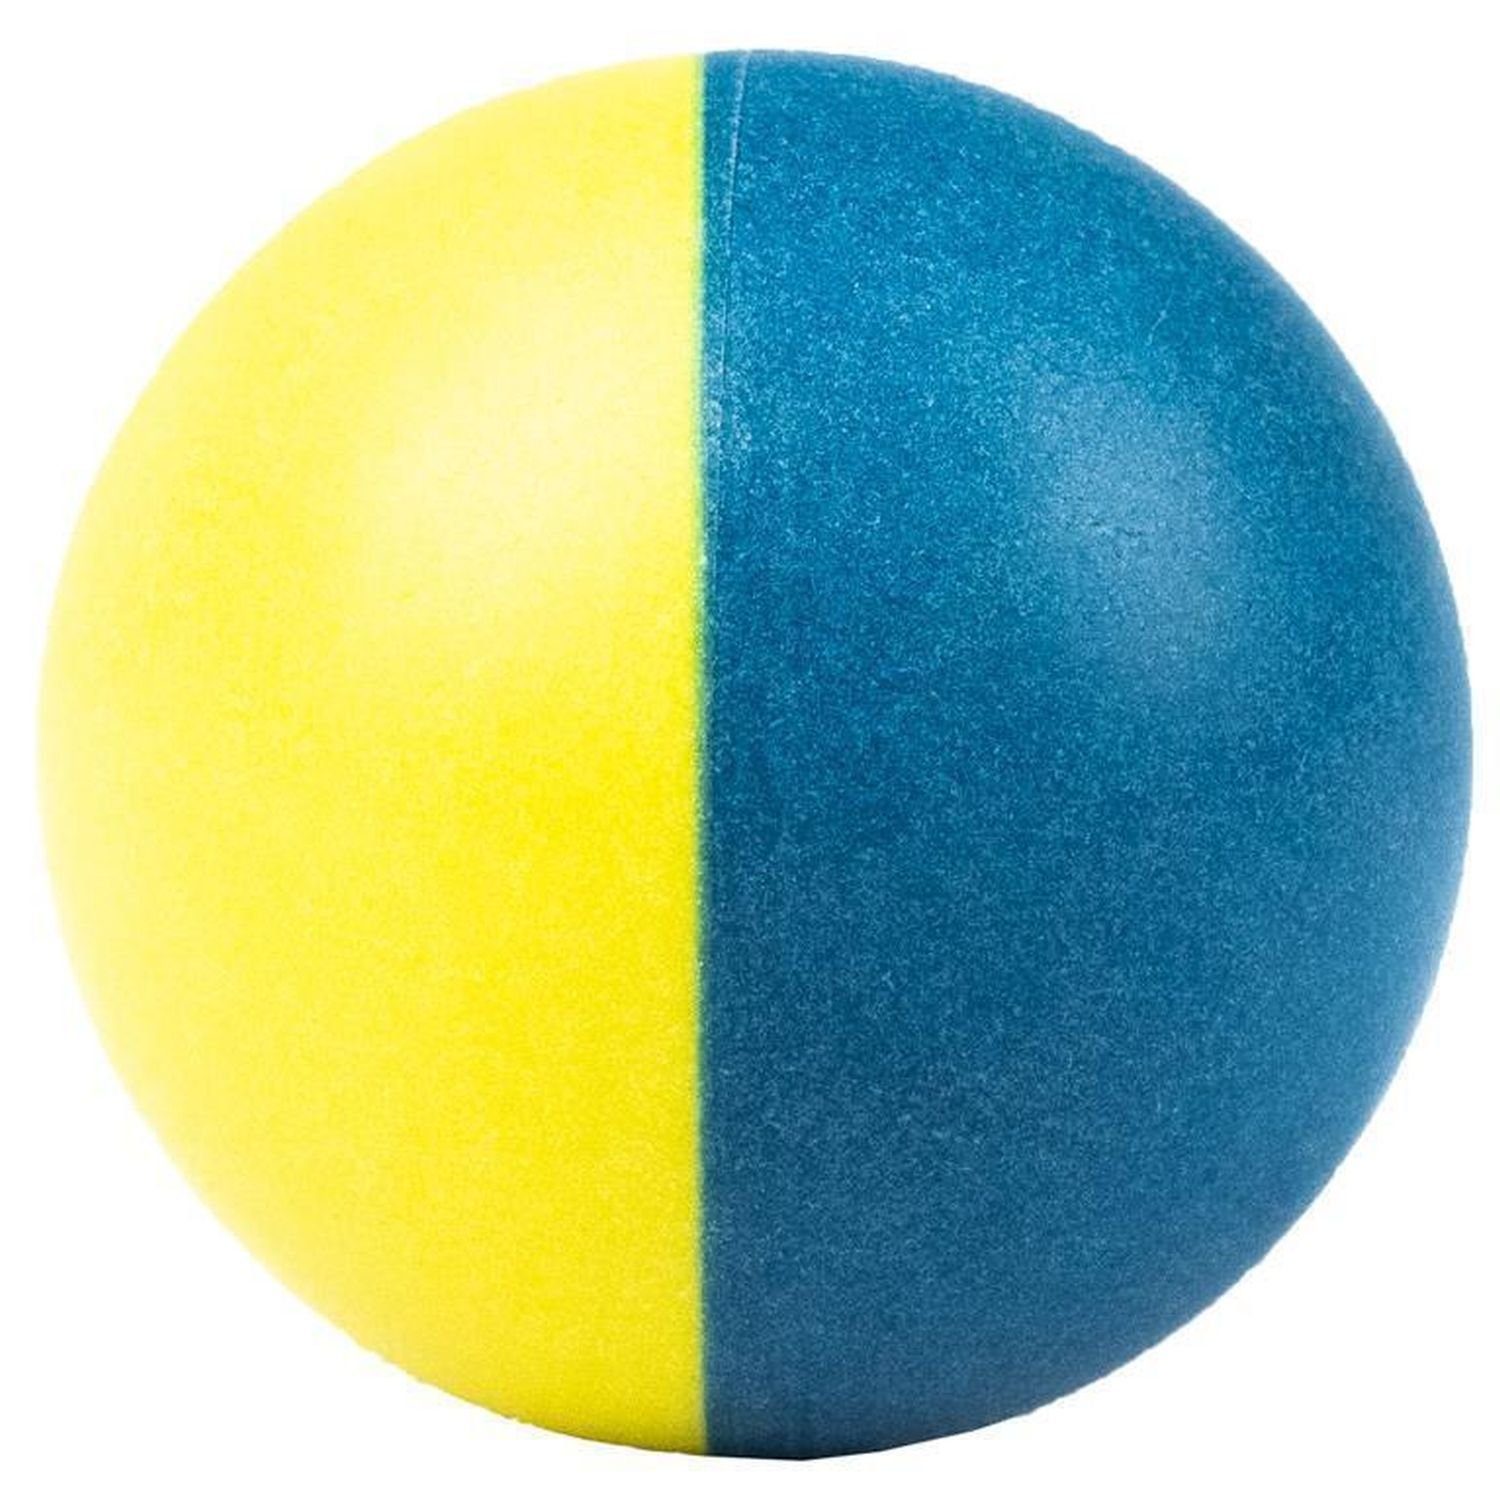 Bälle Tischtennisball Tischtennisball Tischtennis Ball Balls Sunflex 6 Bälle Gelb-Blau,